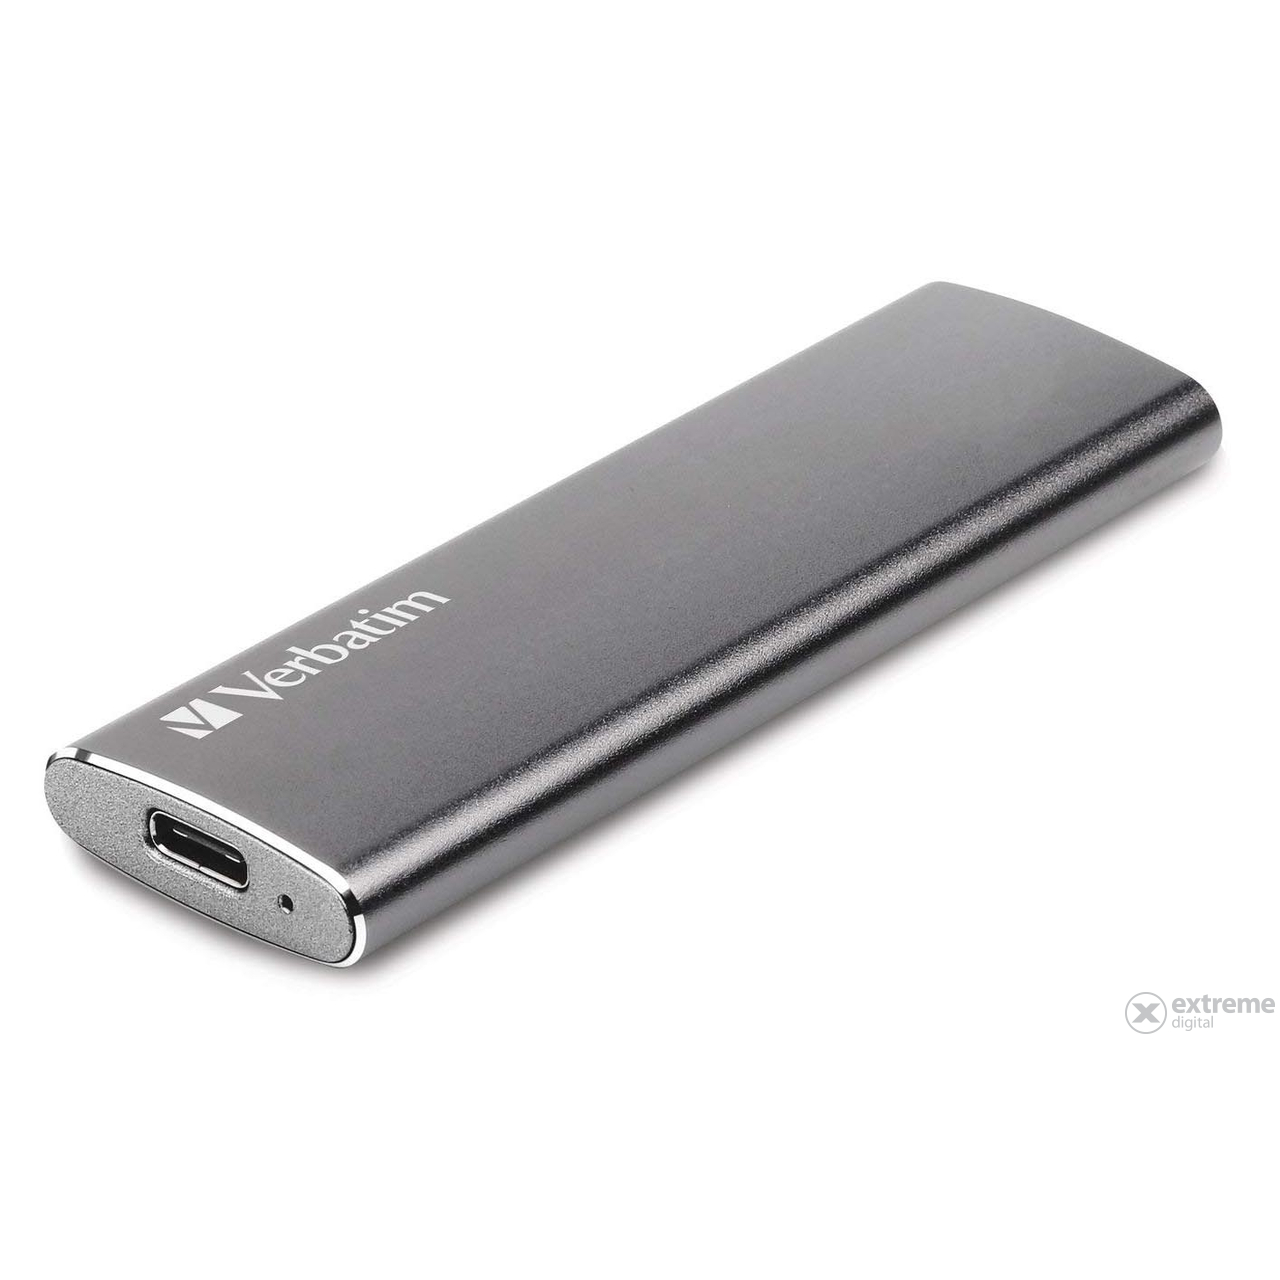 Verbatim Vx500 240GB USB 3.1 externer SSD, grau